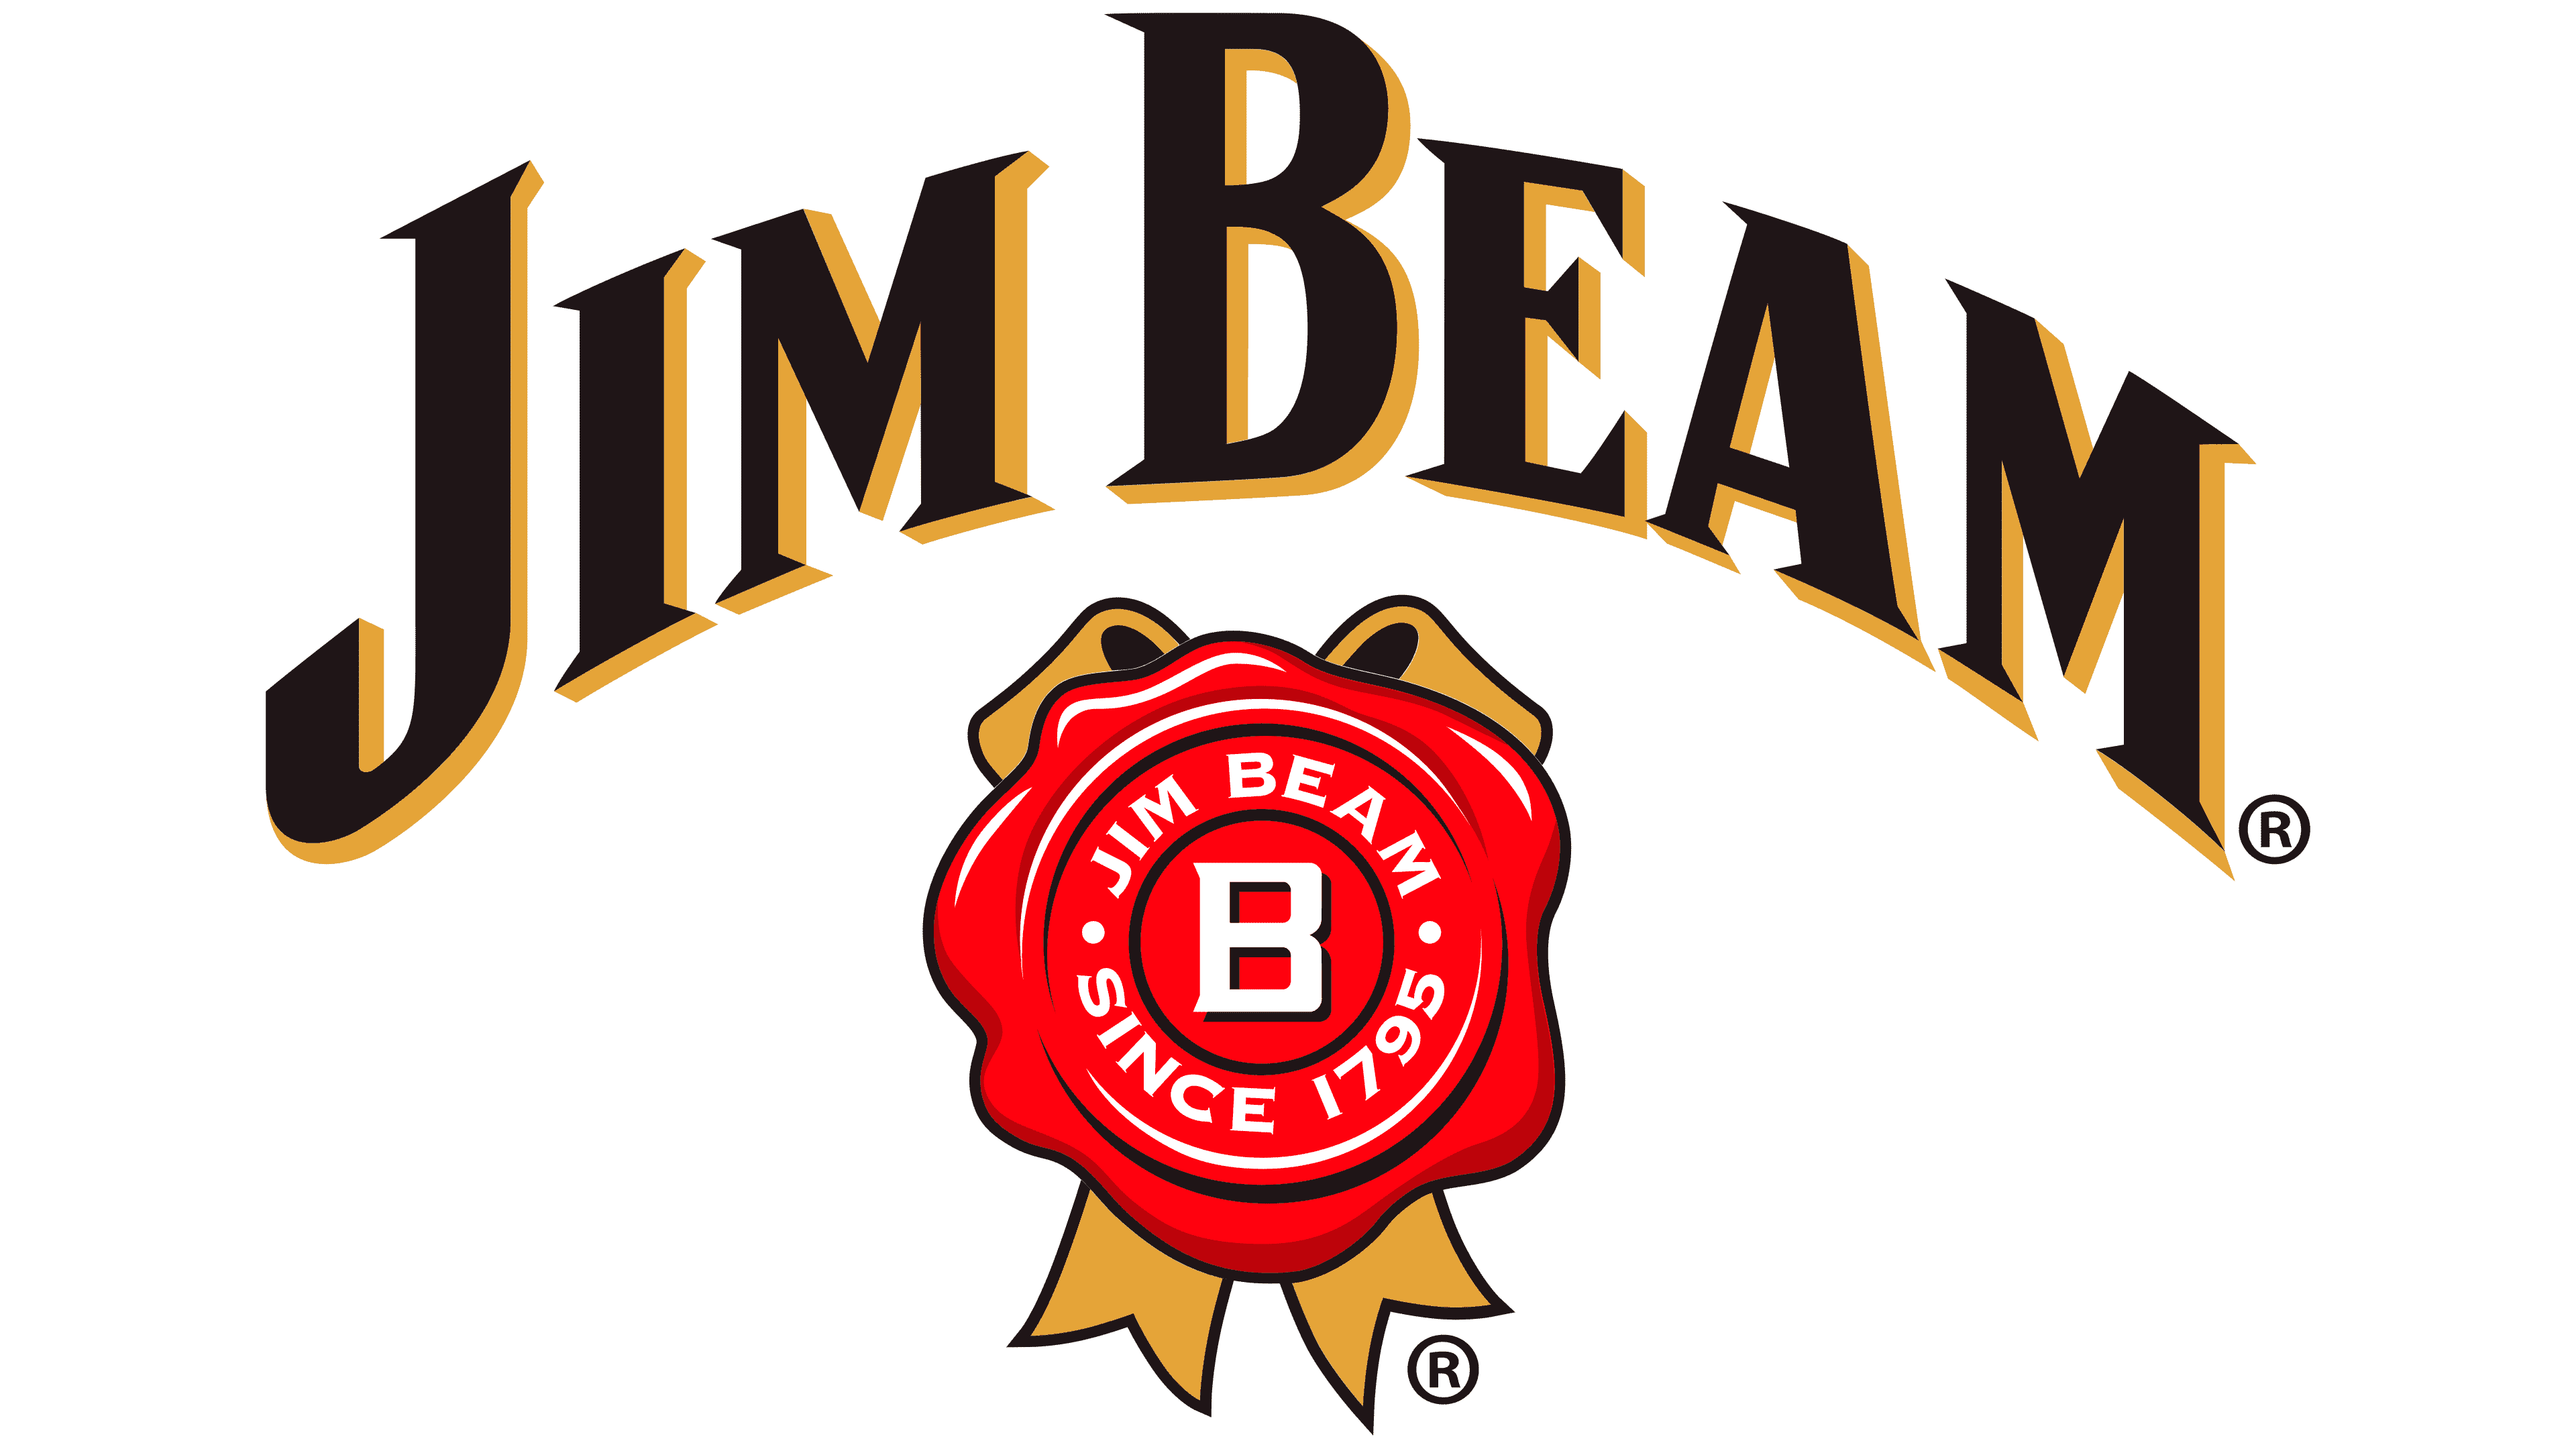 Jim-Beam-logo